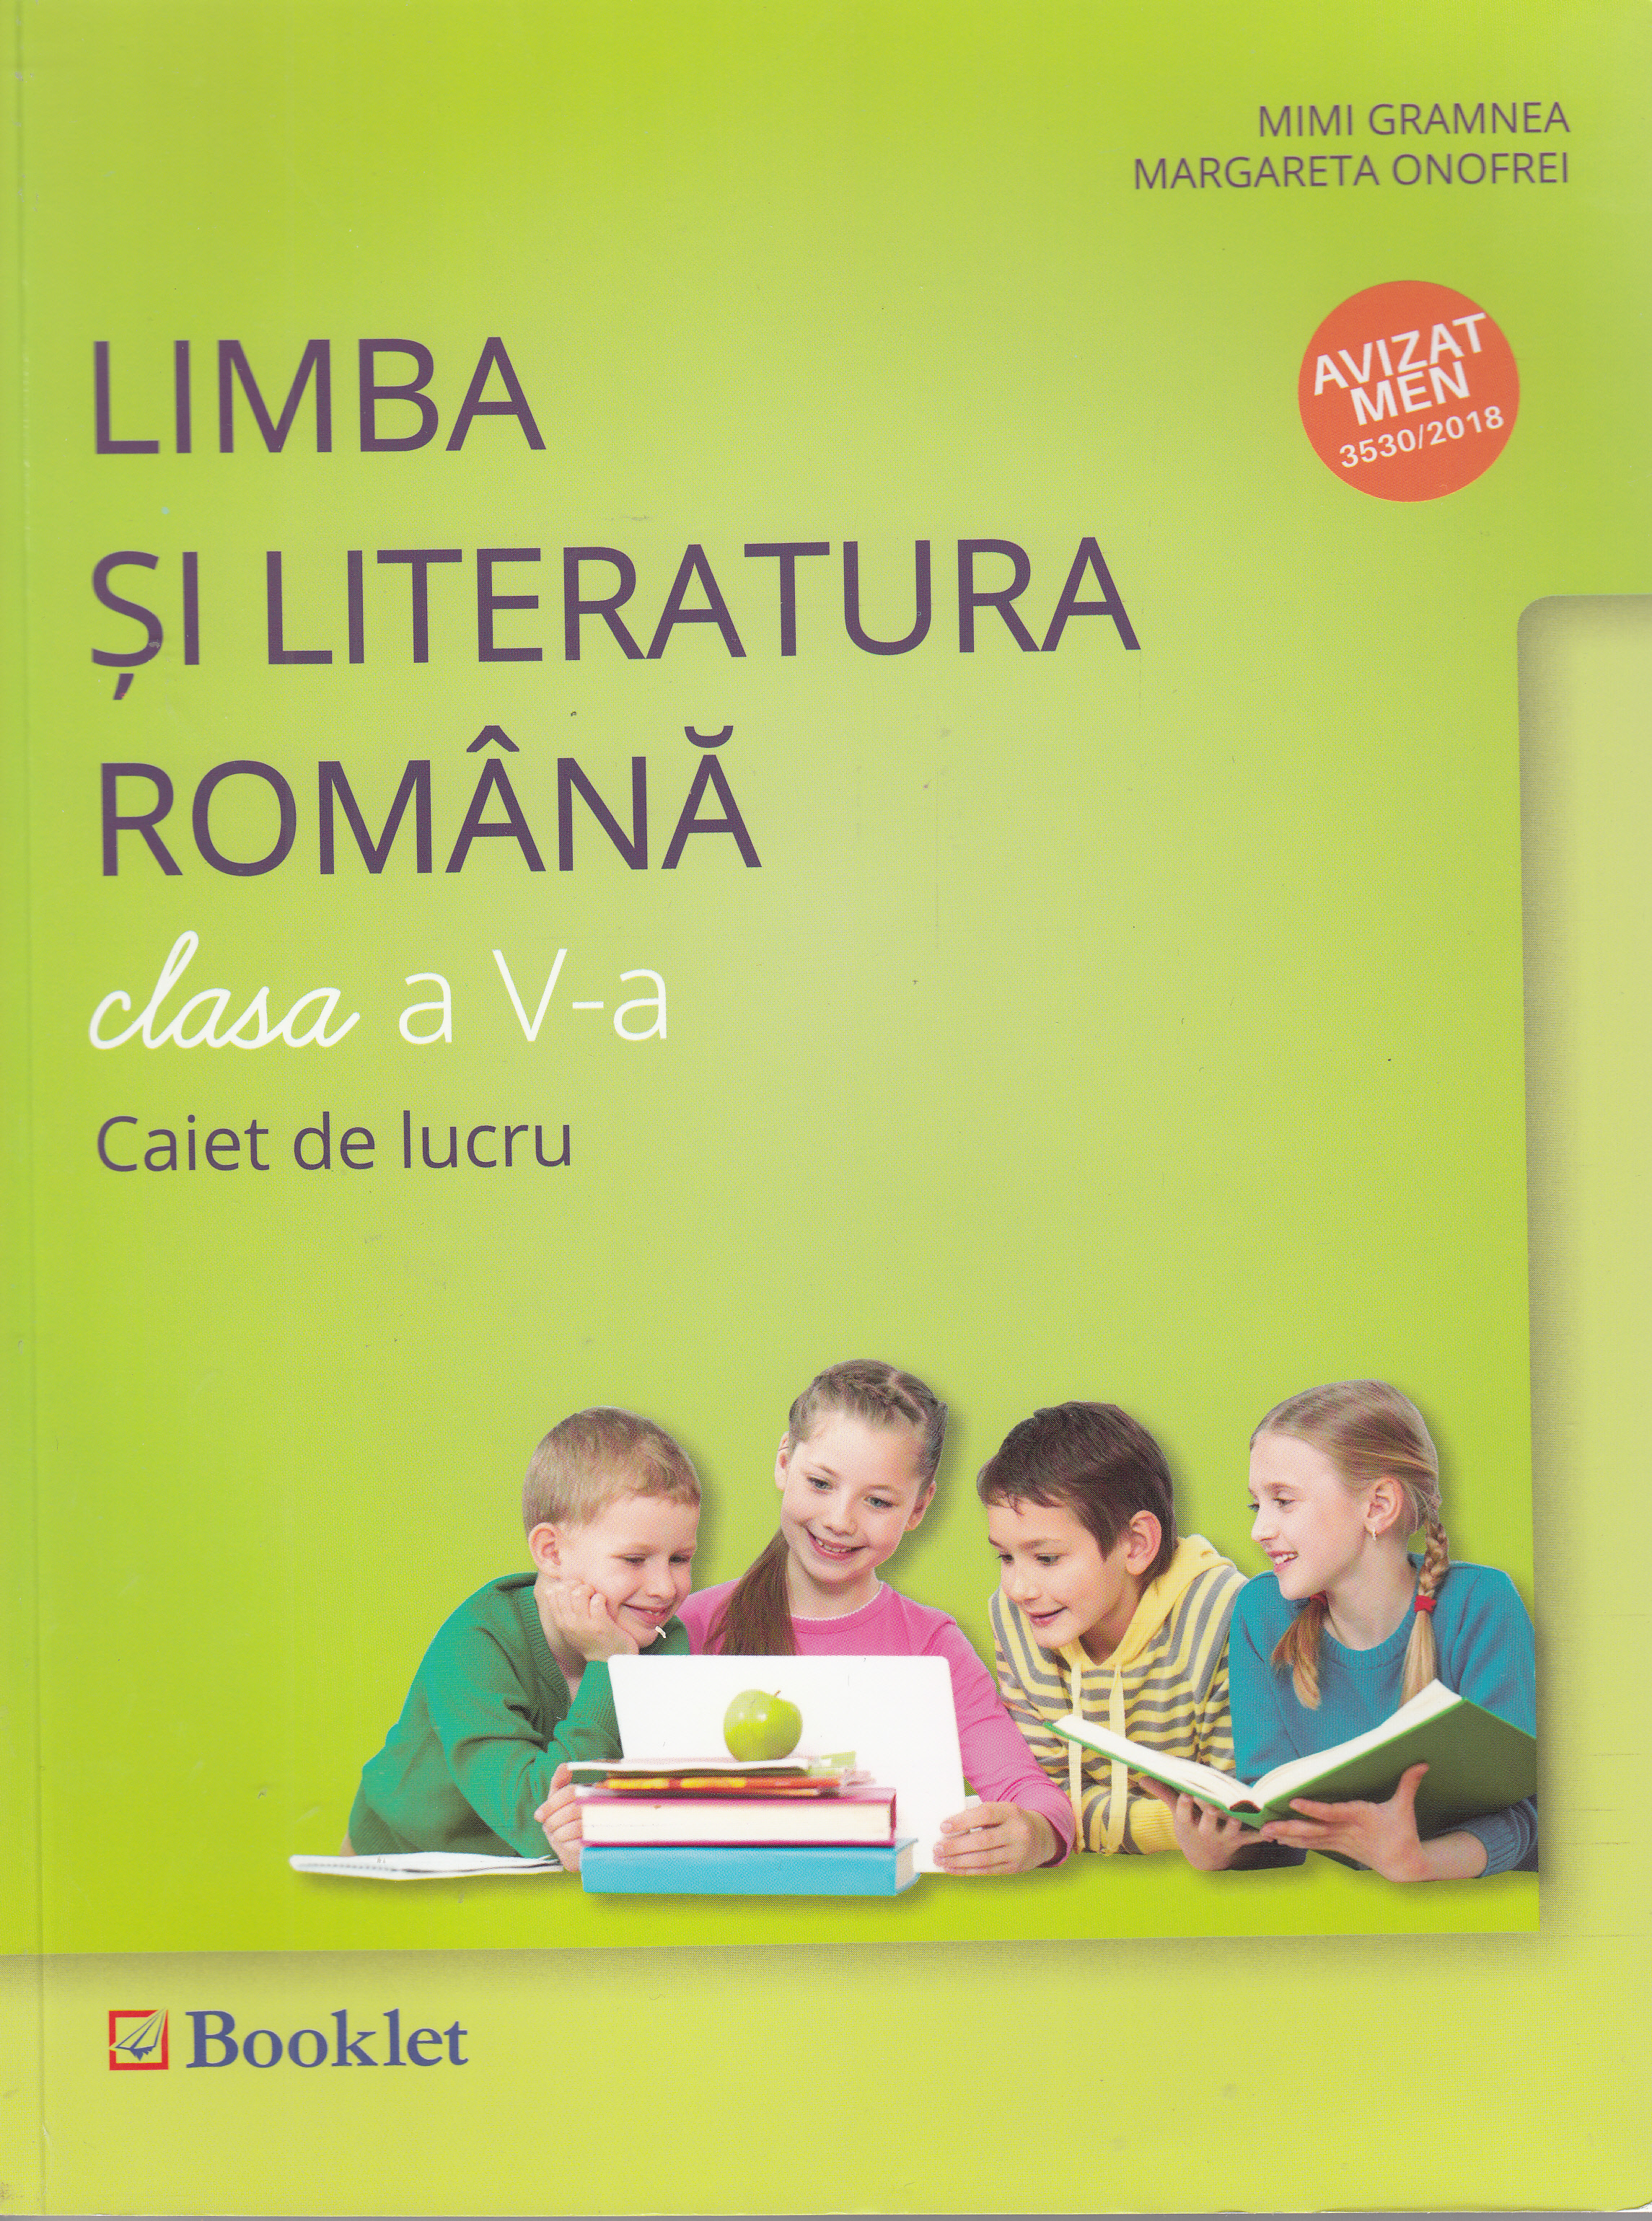 Limba si literatura romana - Clasa 5 - Caiet de lucru - Mimi Gramnea, Margareta Onofrei